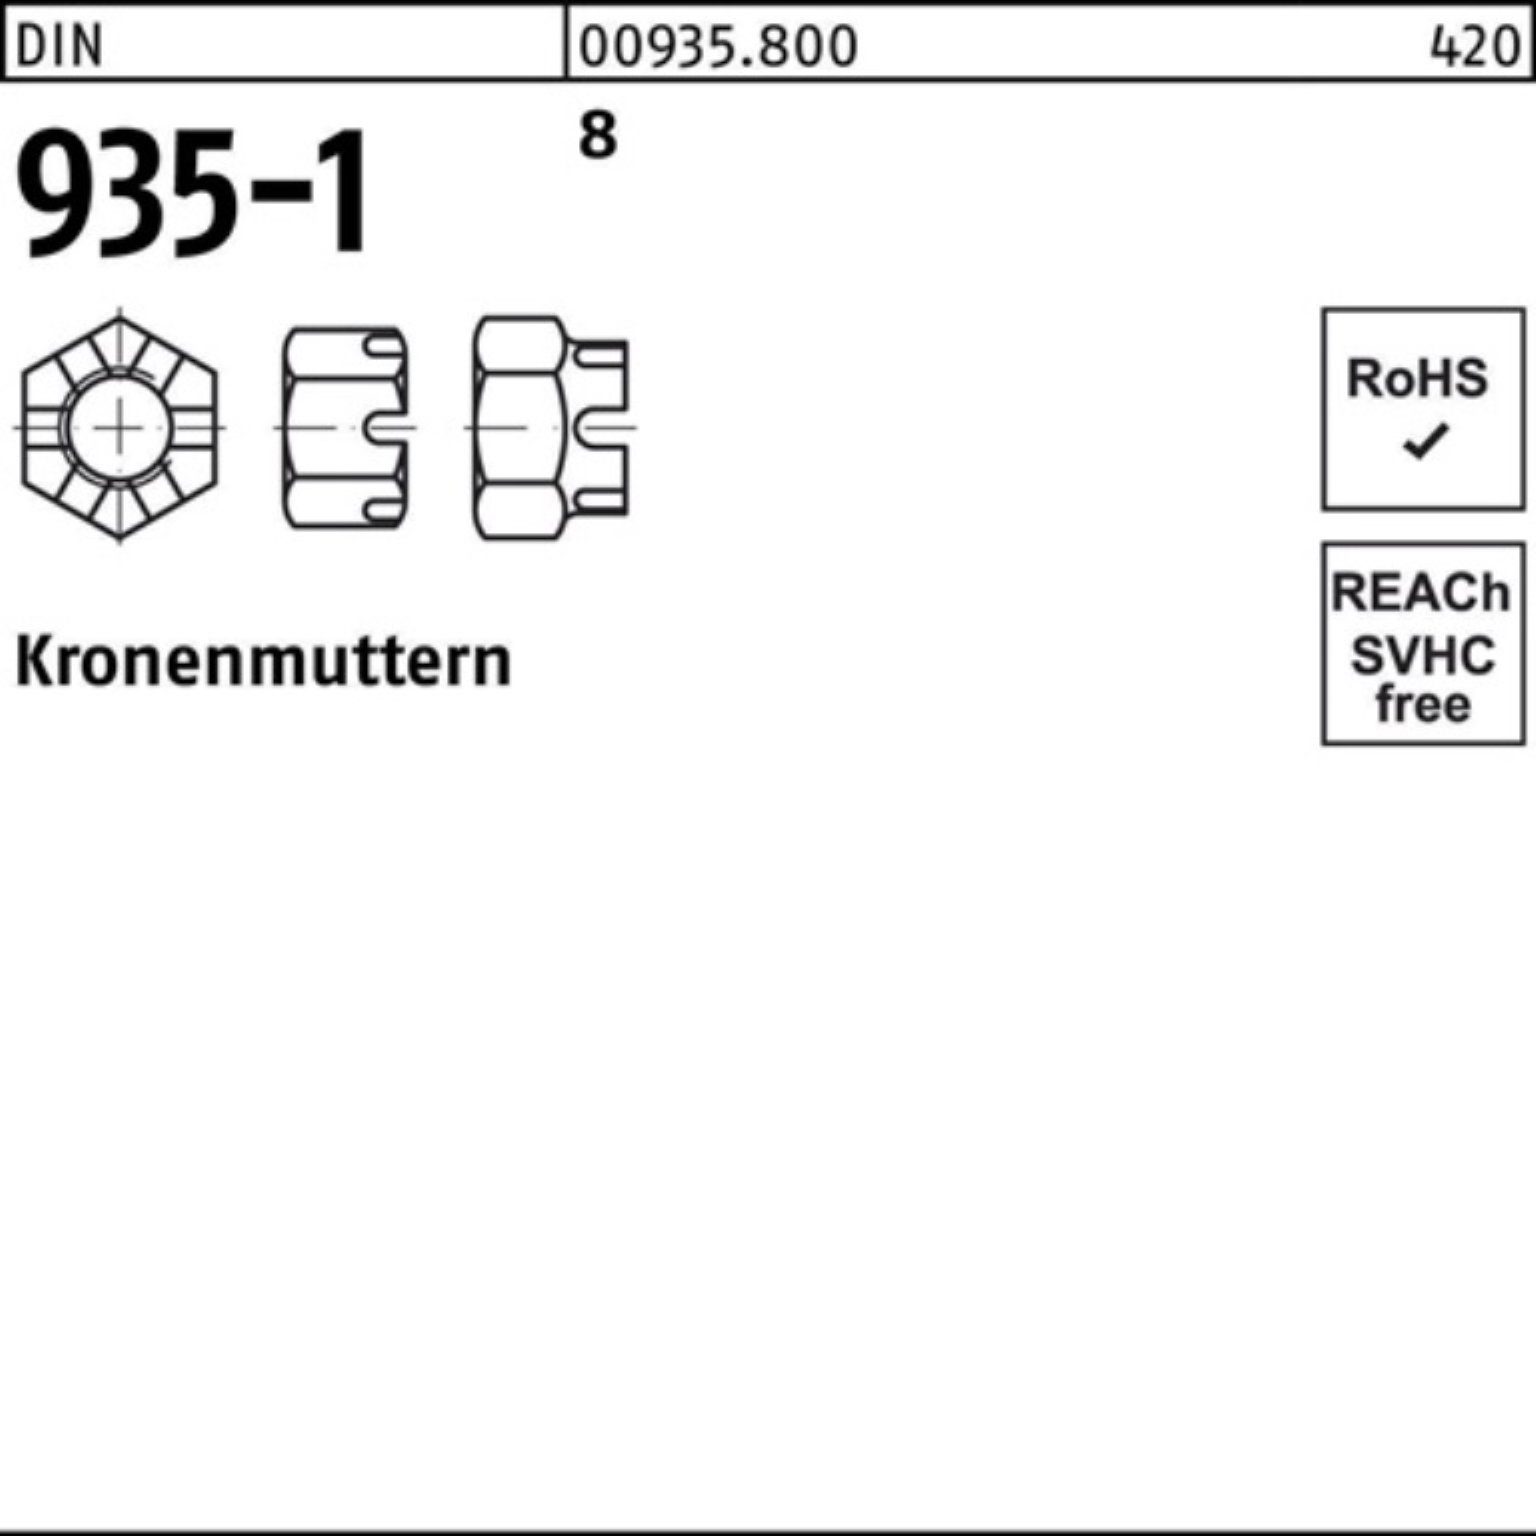 Reyher Kronenmutter 100er Pack Kronenmutter DIN 935-1 M36 8 1 Stück DIN 935-1 8 Kronenmut